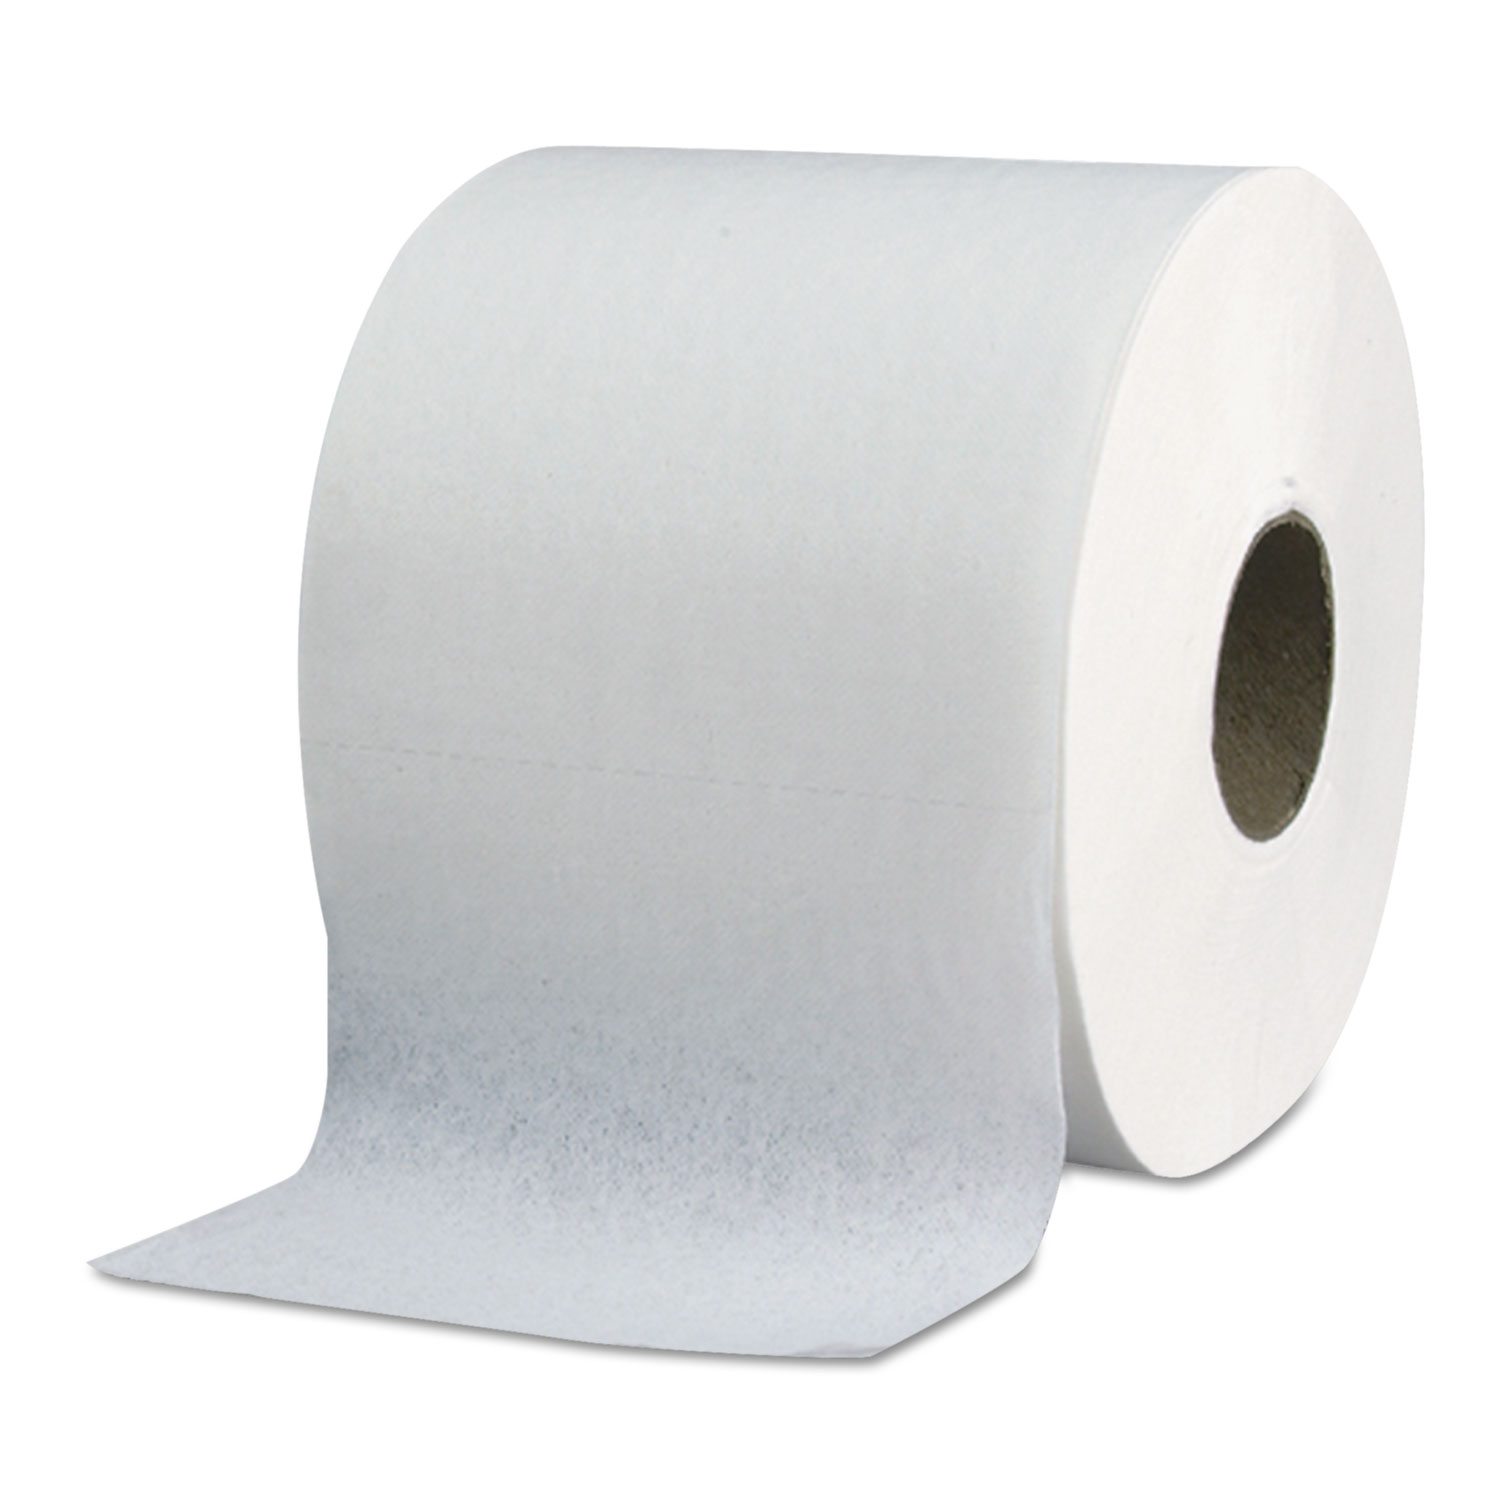 Never-Out Executive High-Capacity Bath Tissue, 2-Ply, White, 770/Roll, 48/Carton